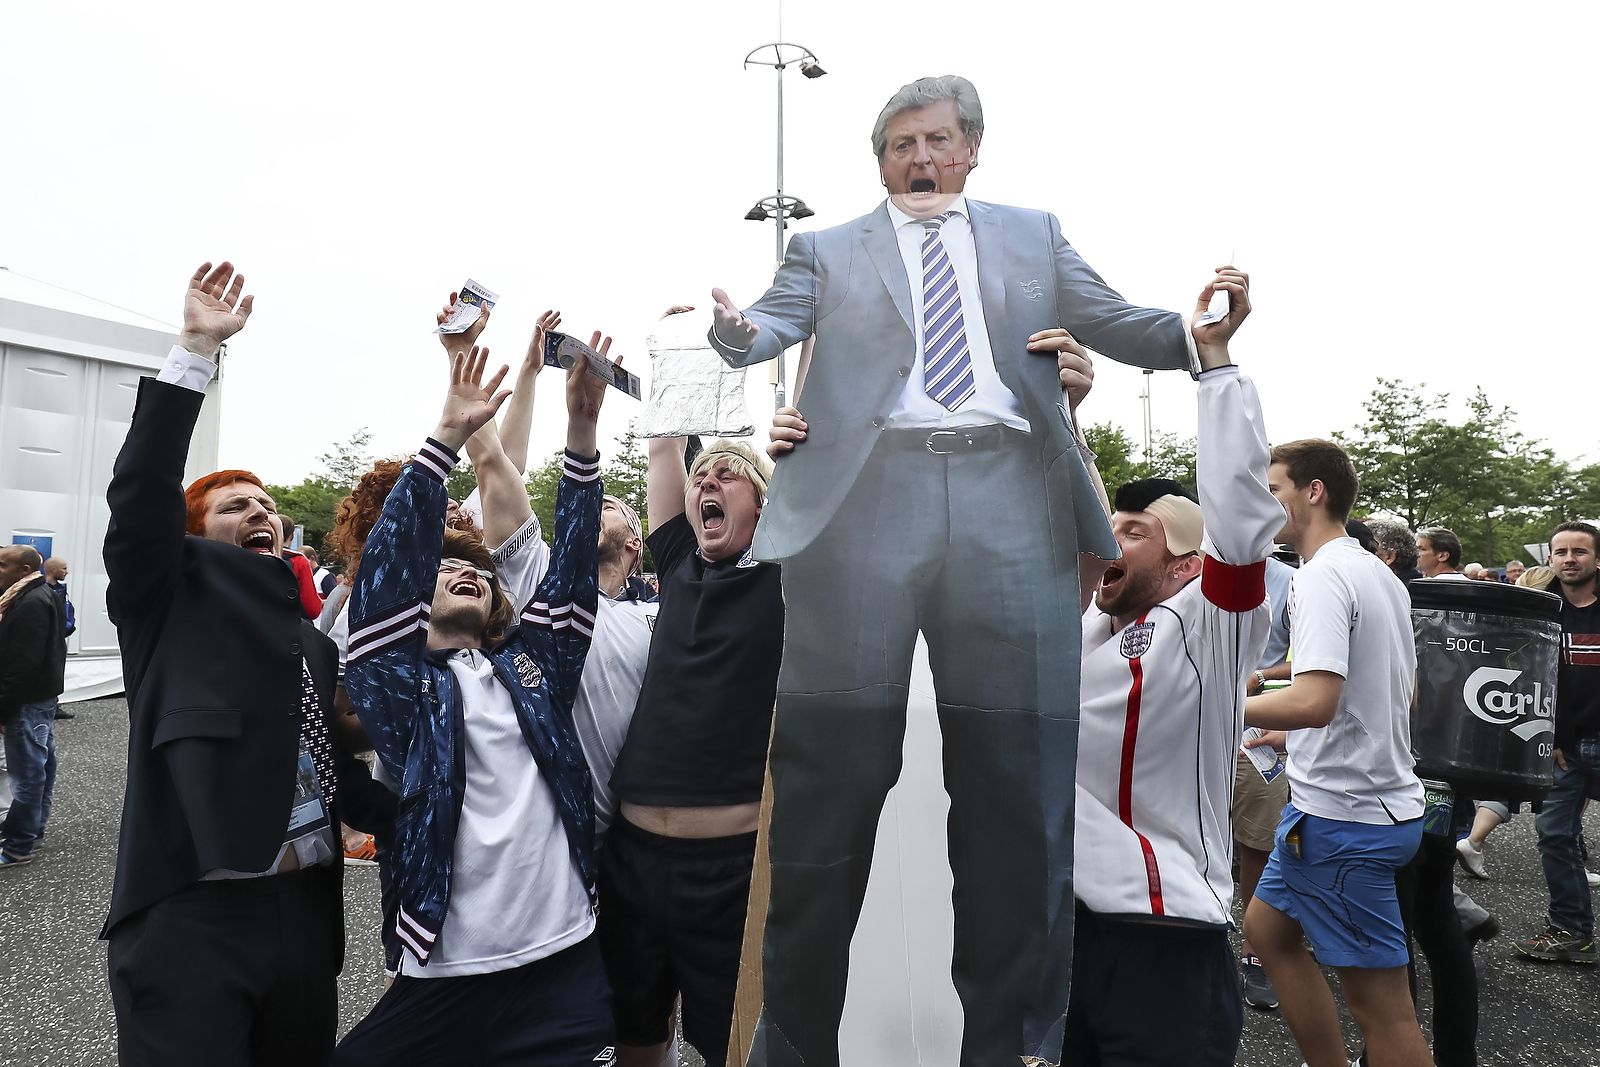 England fans with a cardboard cutout of Roy Hodgson